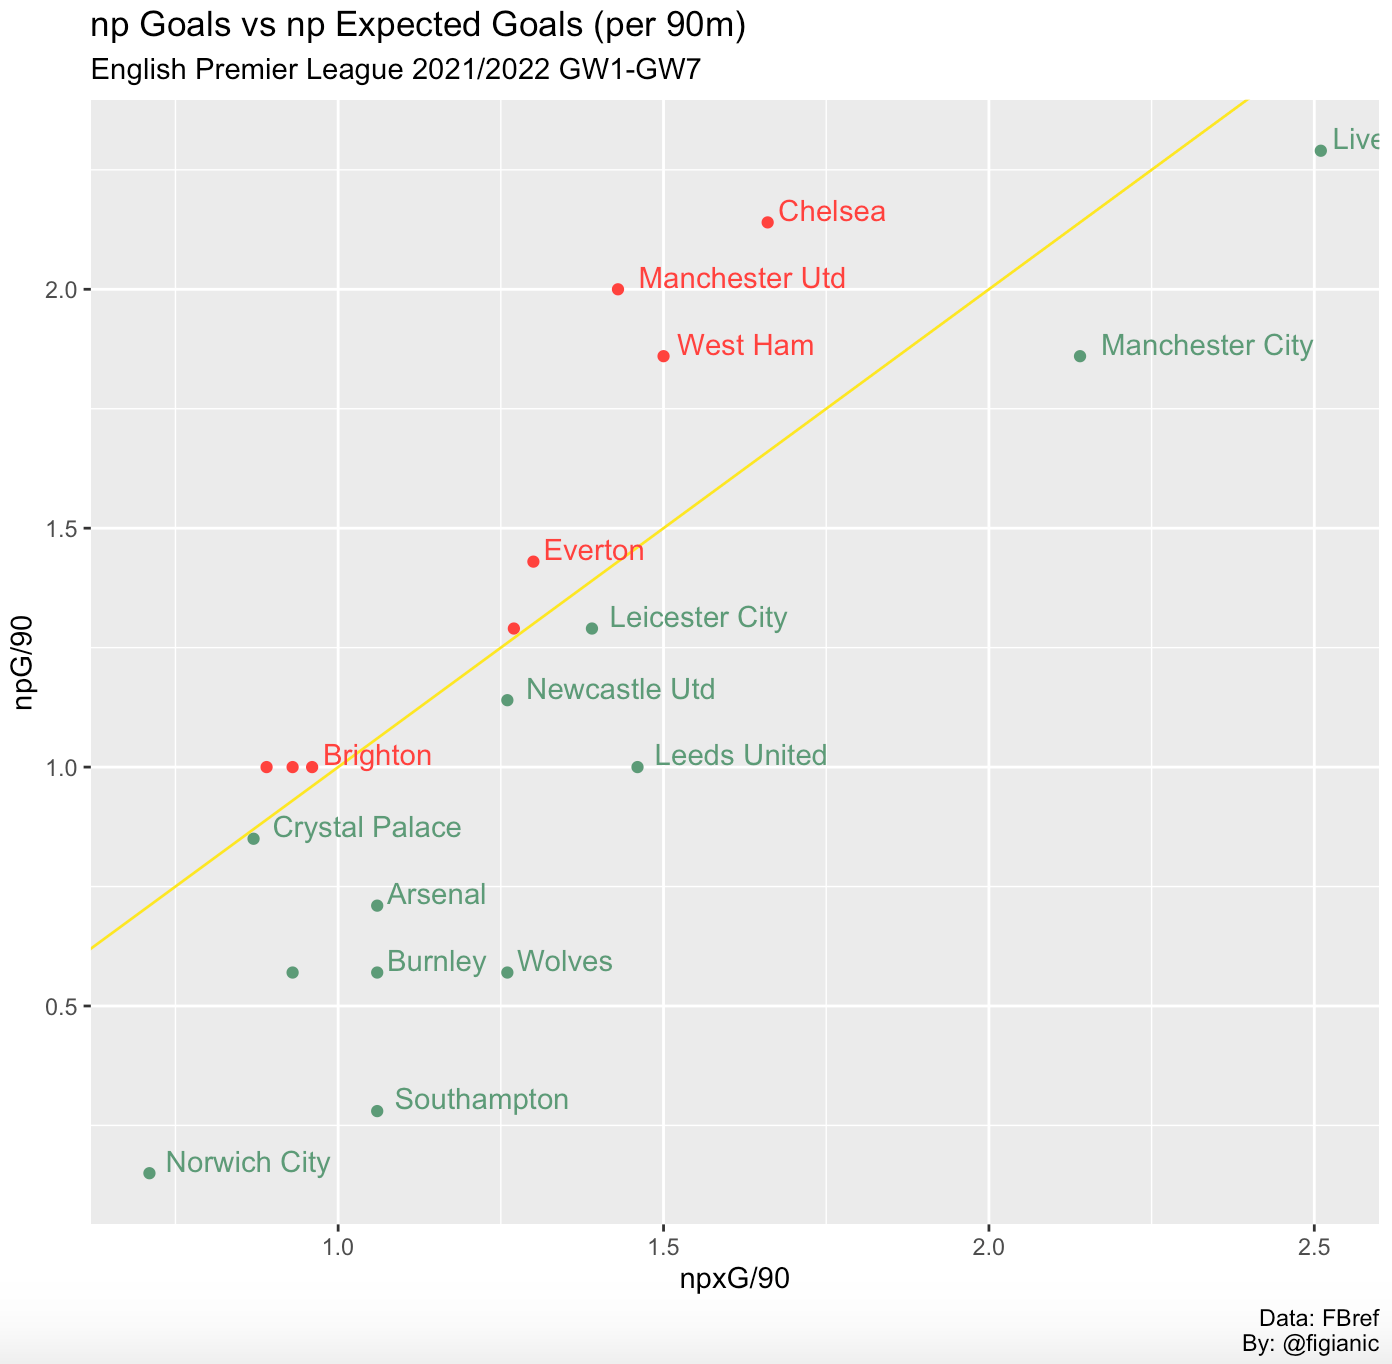 Football Analytics: Using R and FBref Data - Part 2